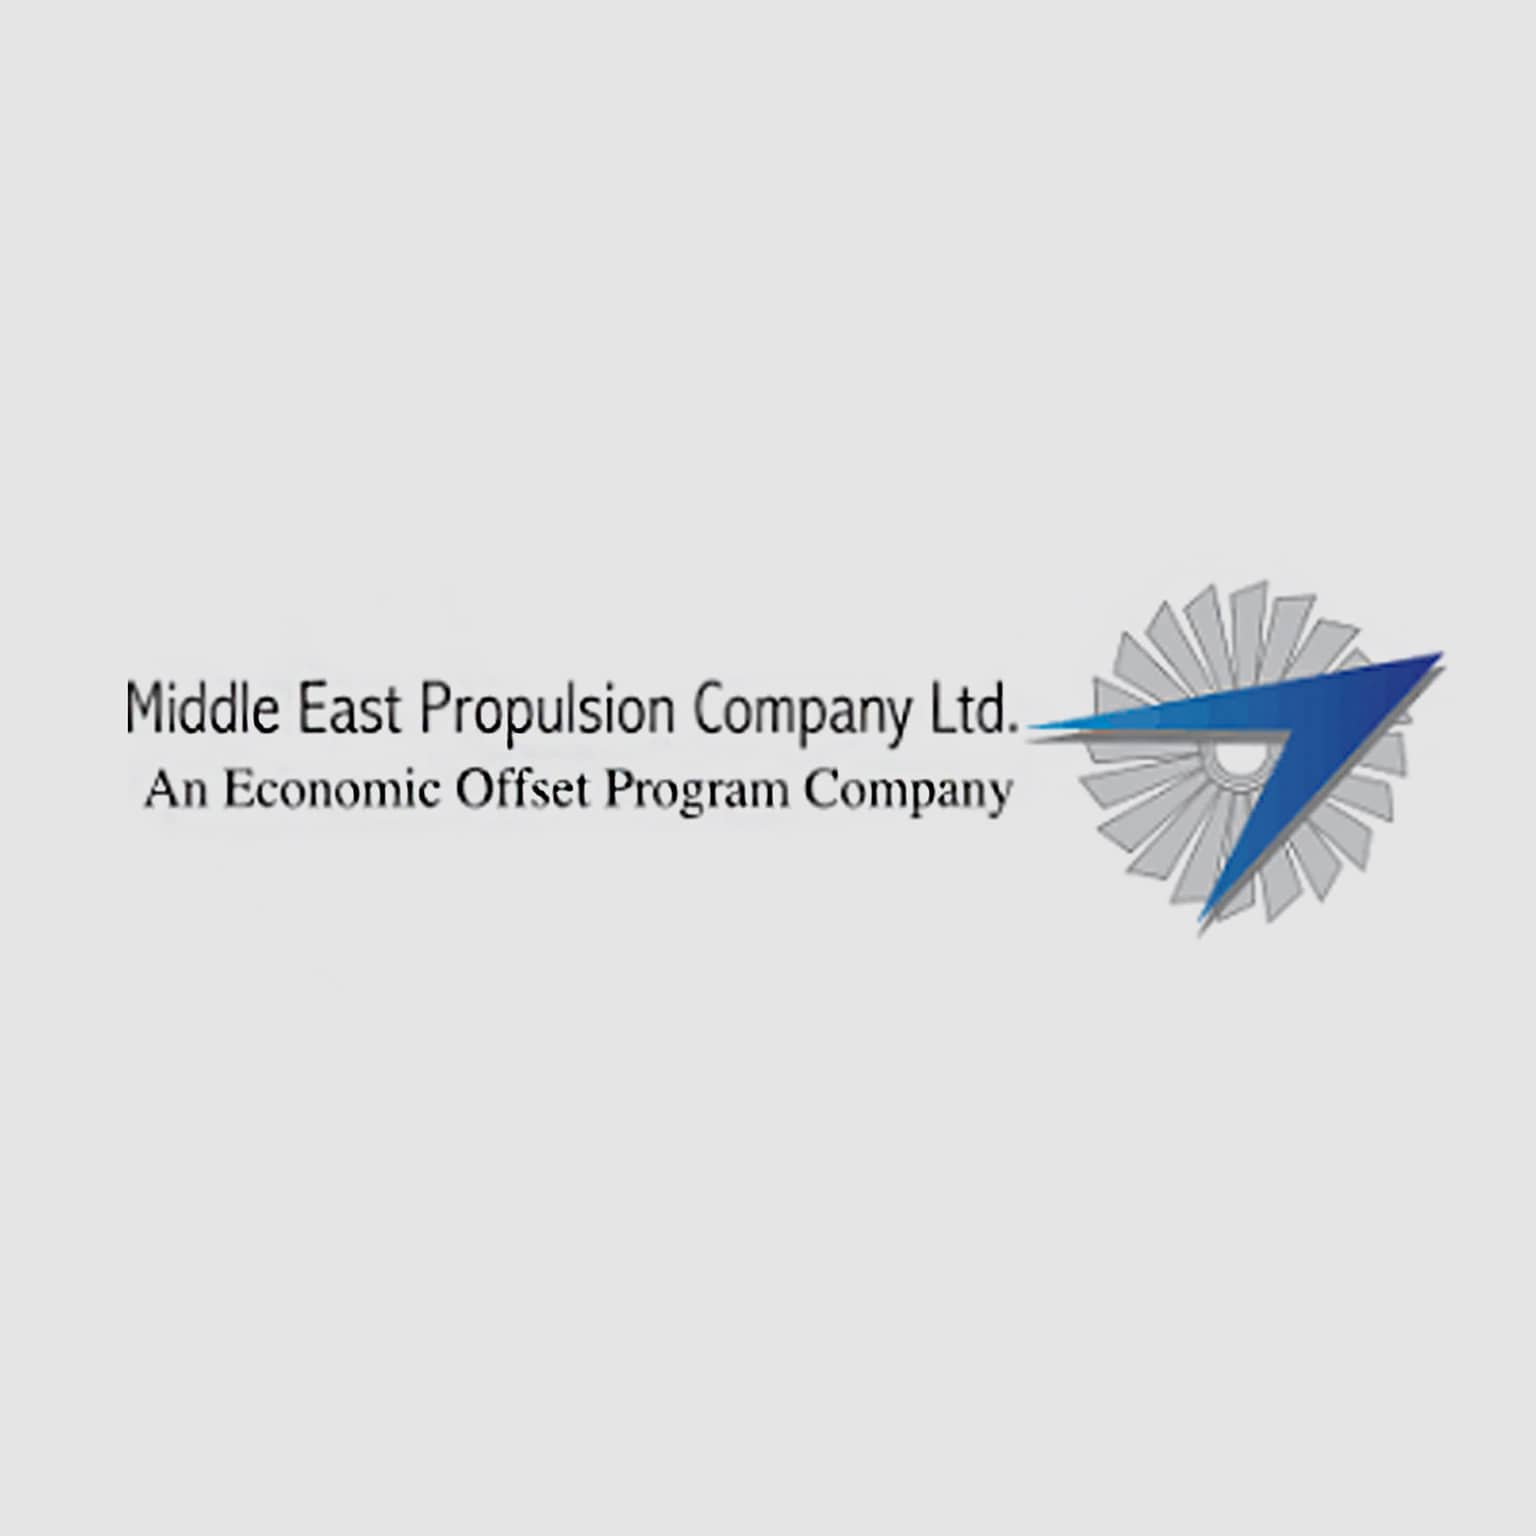 Middle East Propulsion Company Ltd.